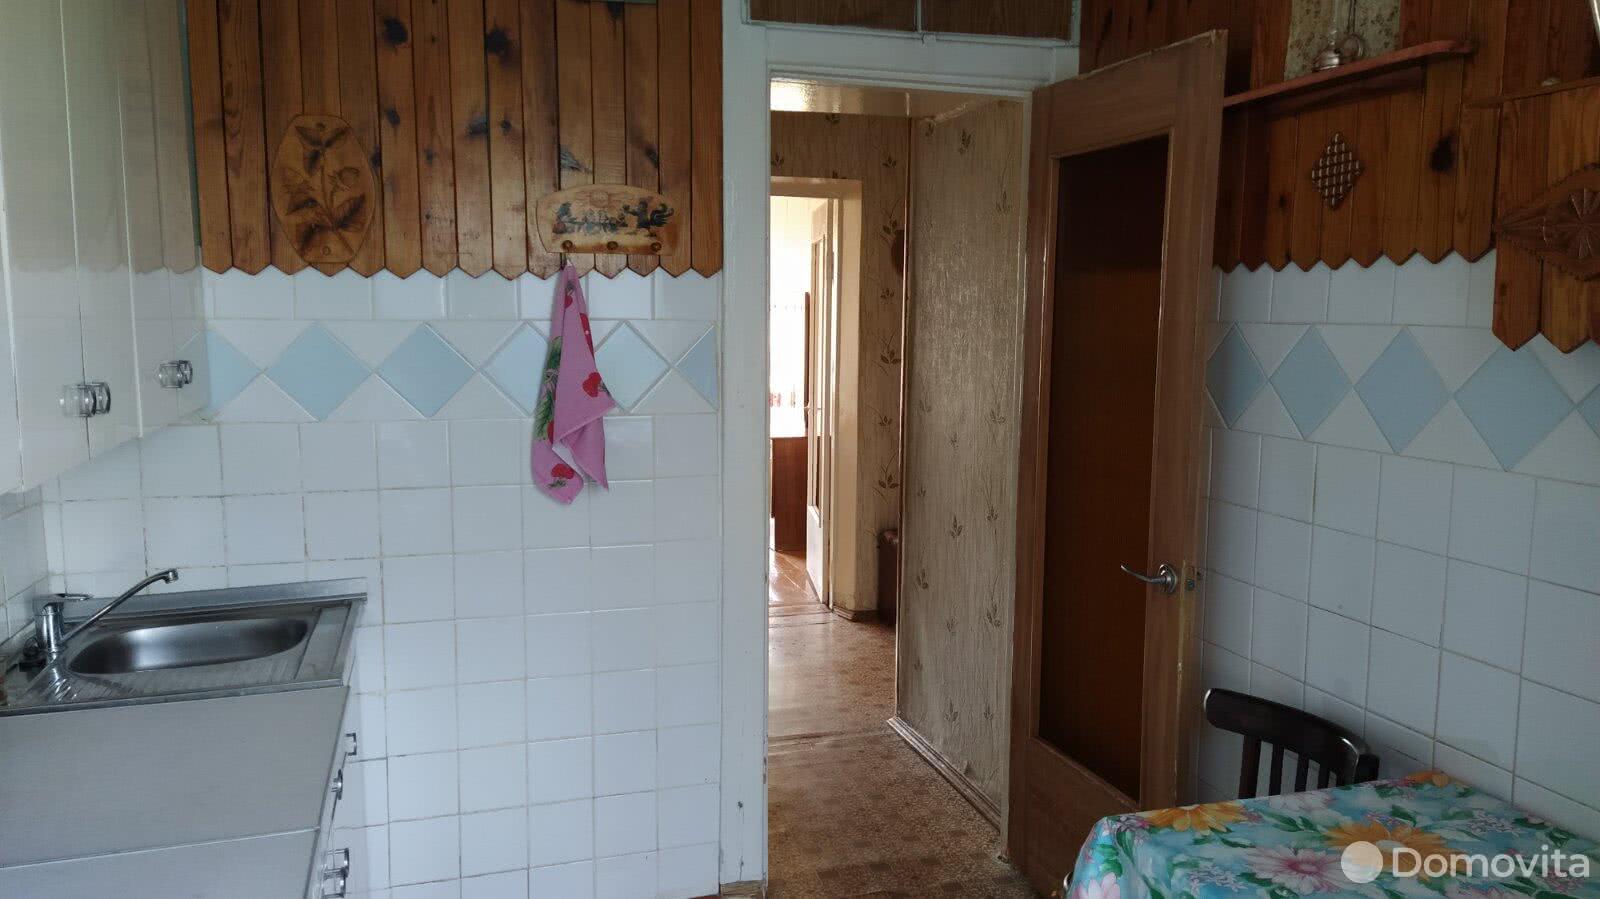 комната, Борисов, ул. Чапаева, д. 39, стоимость аренды 388 р./мес.